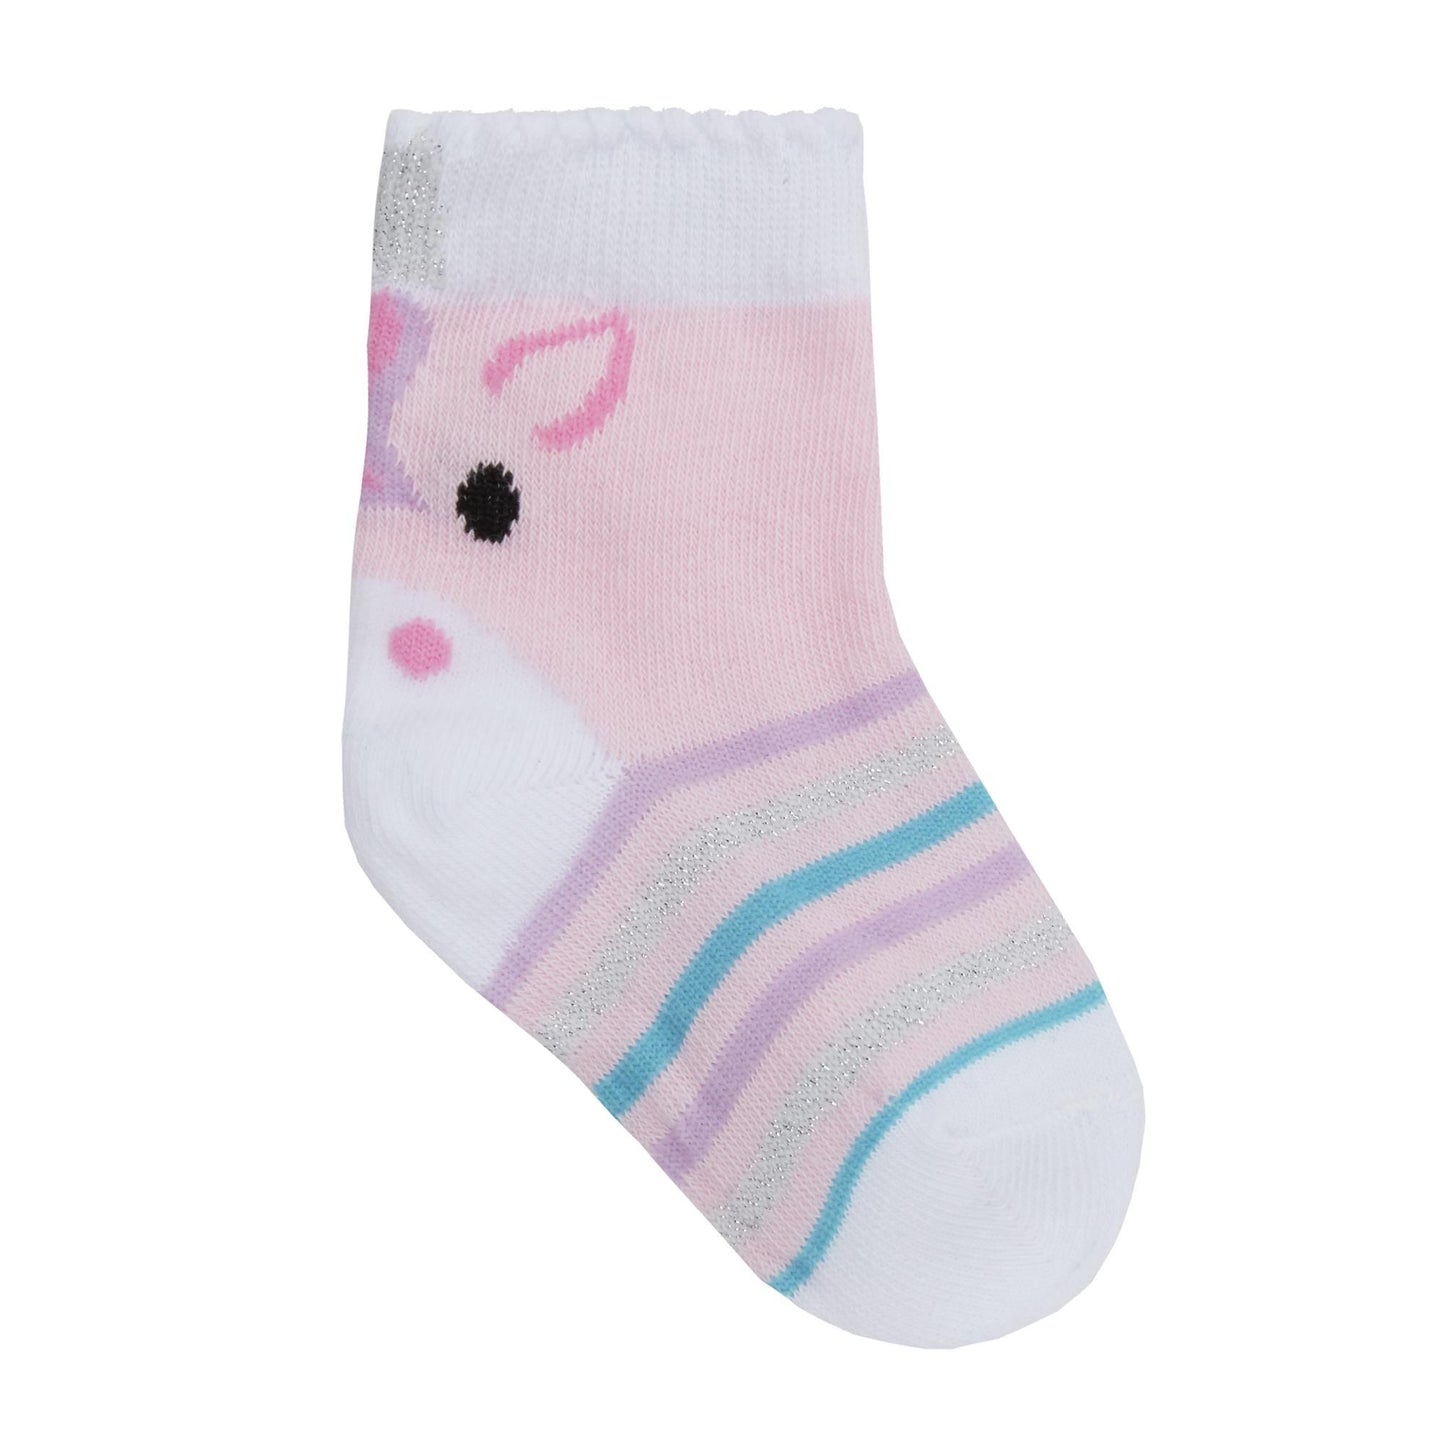 Babies 3 Pk of Unicorn Design Socks